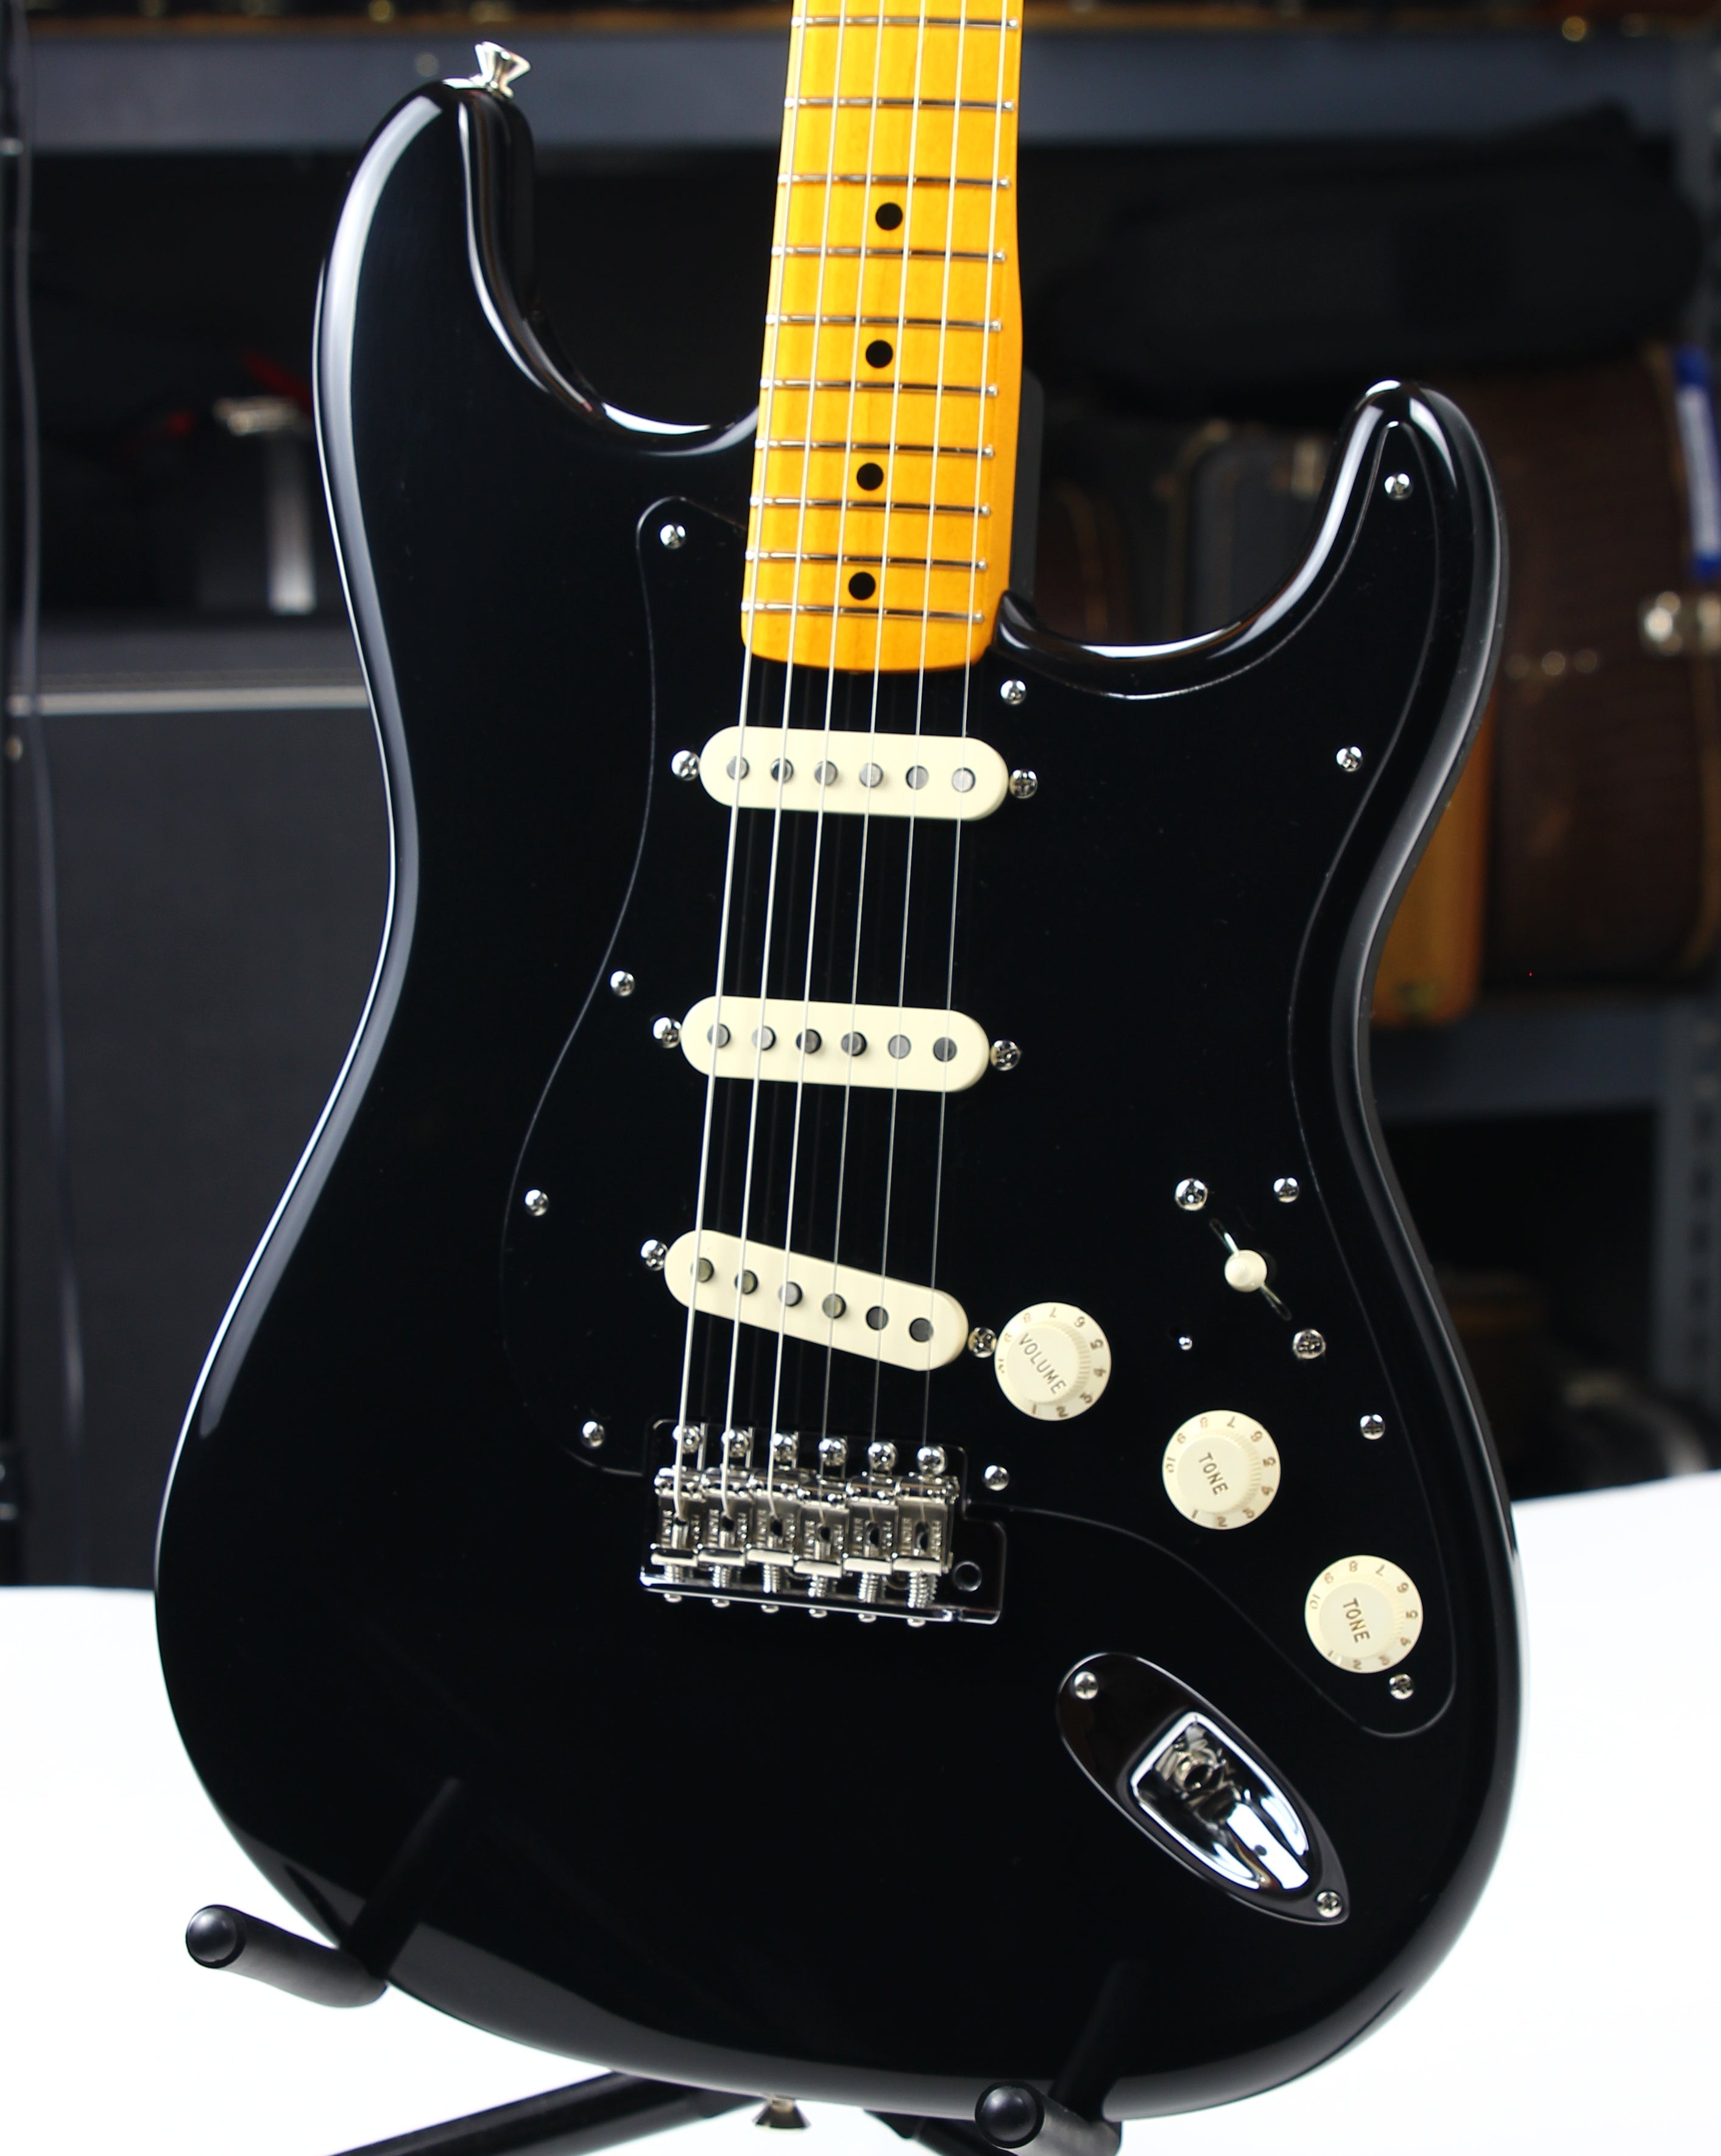 *SOLD*  2011 Fender Custom Shop David Gilmour Signature Stratocaster NOS - Black Strat Artist Series MINT!